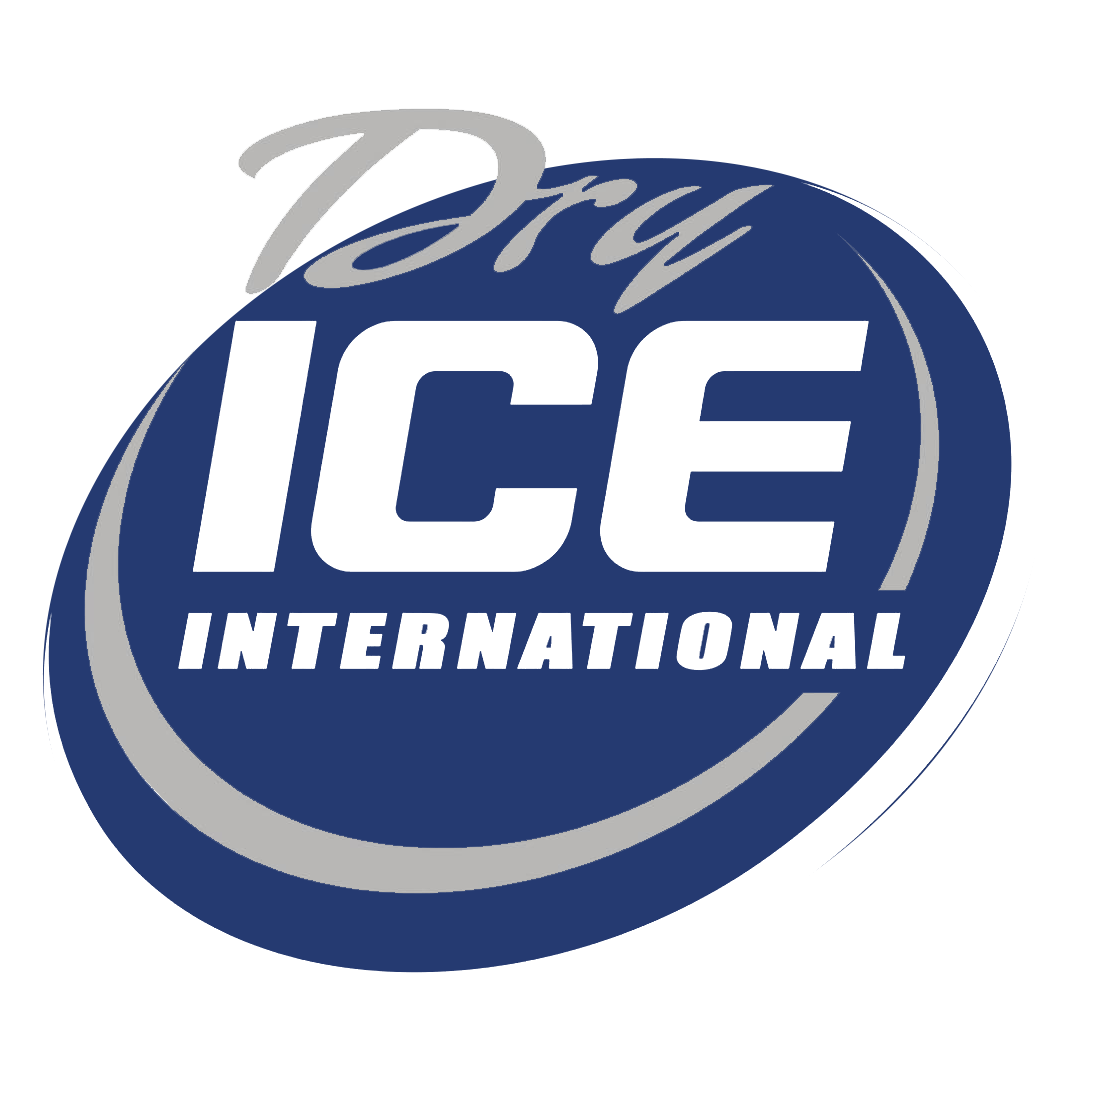 Dry ice International logo